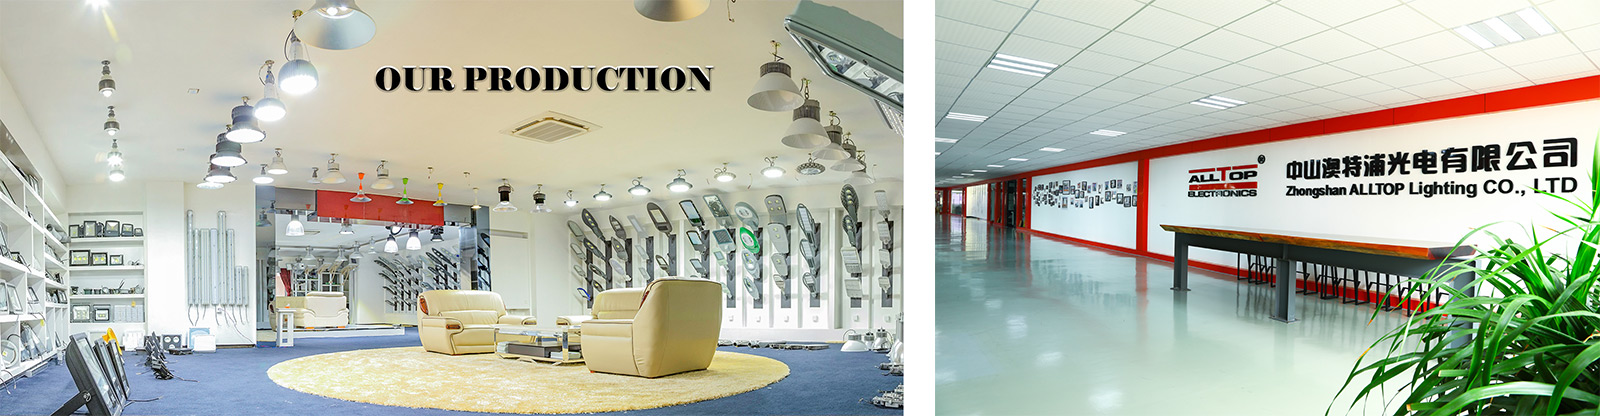 convenient indoor light fittings manufacturer-9